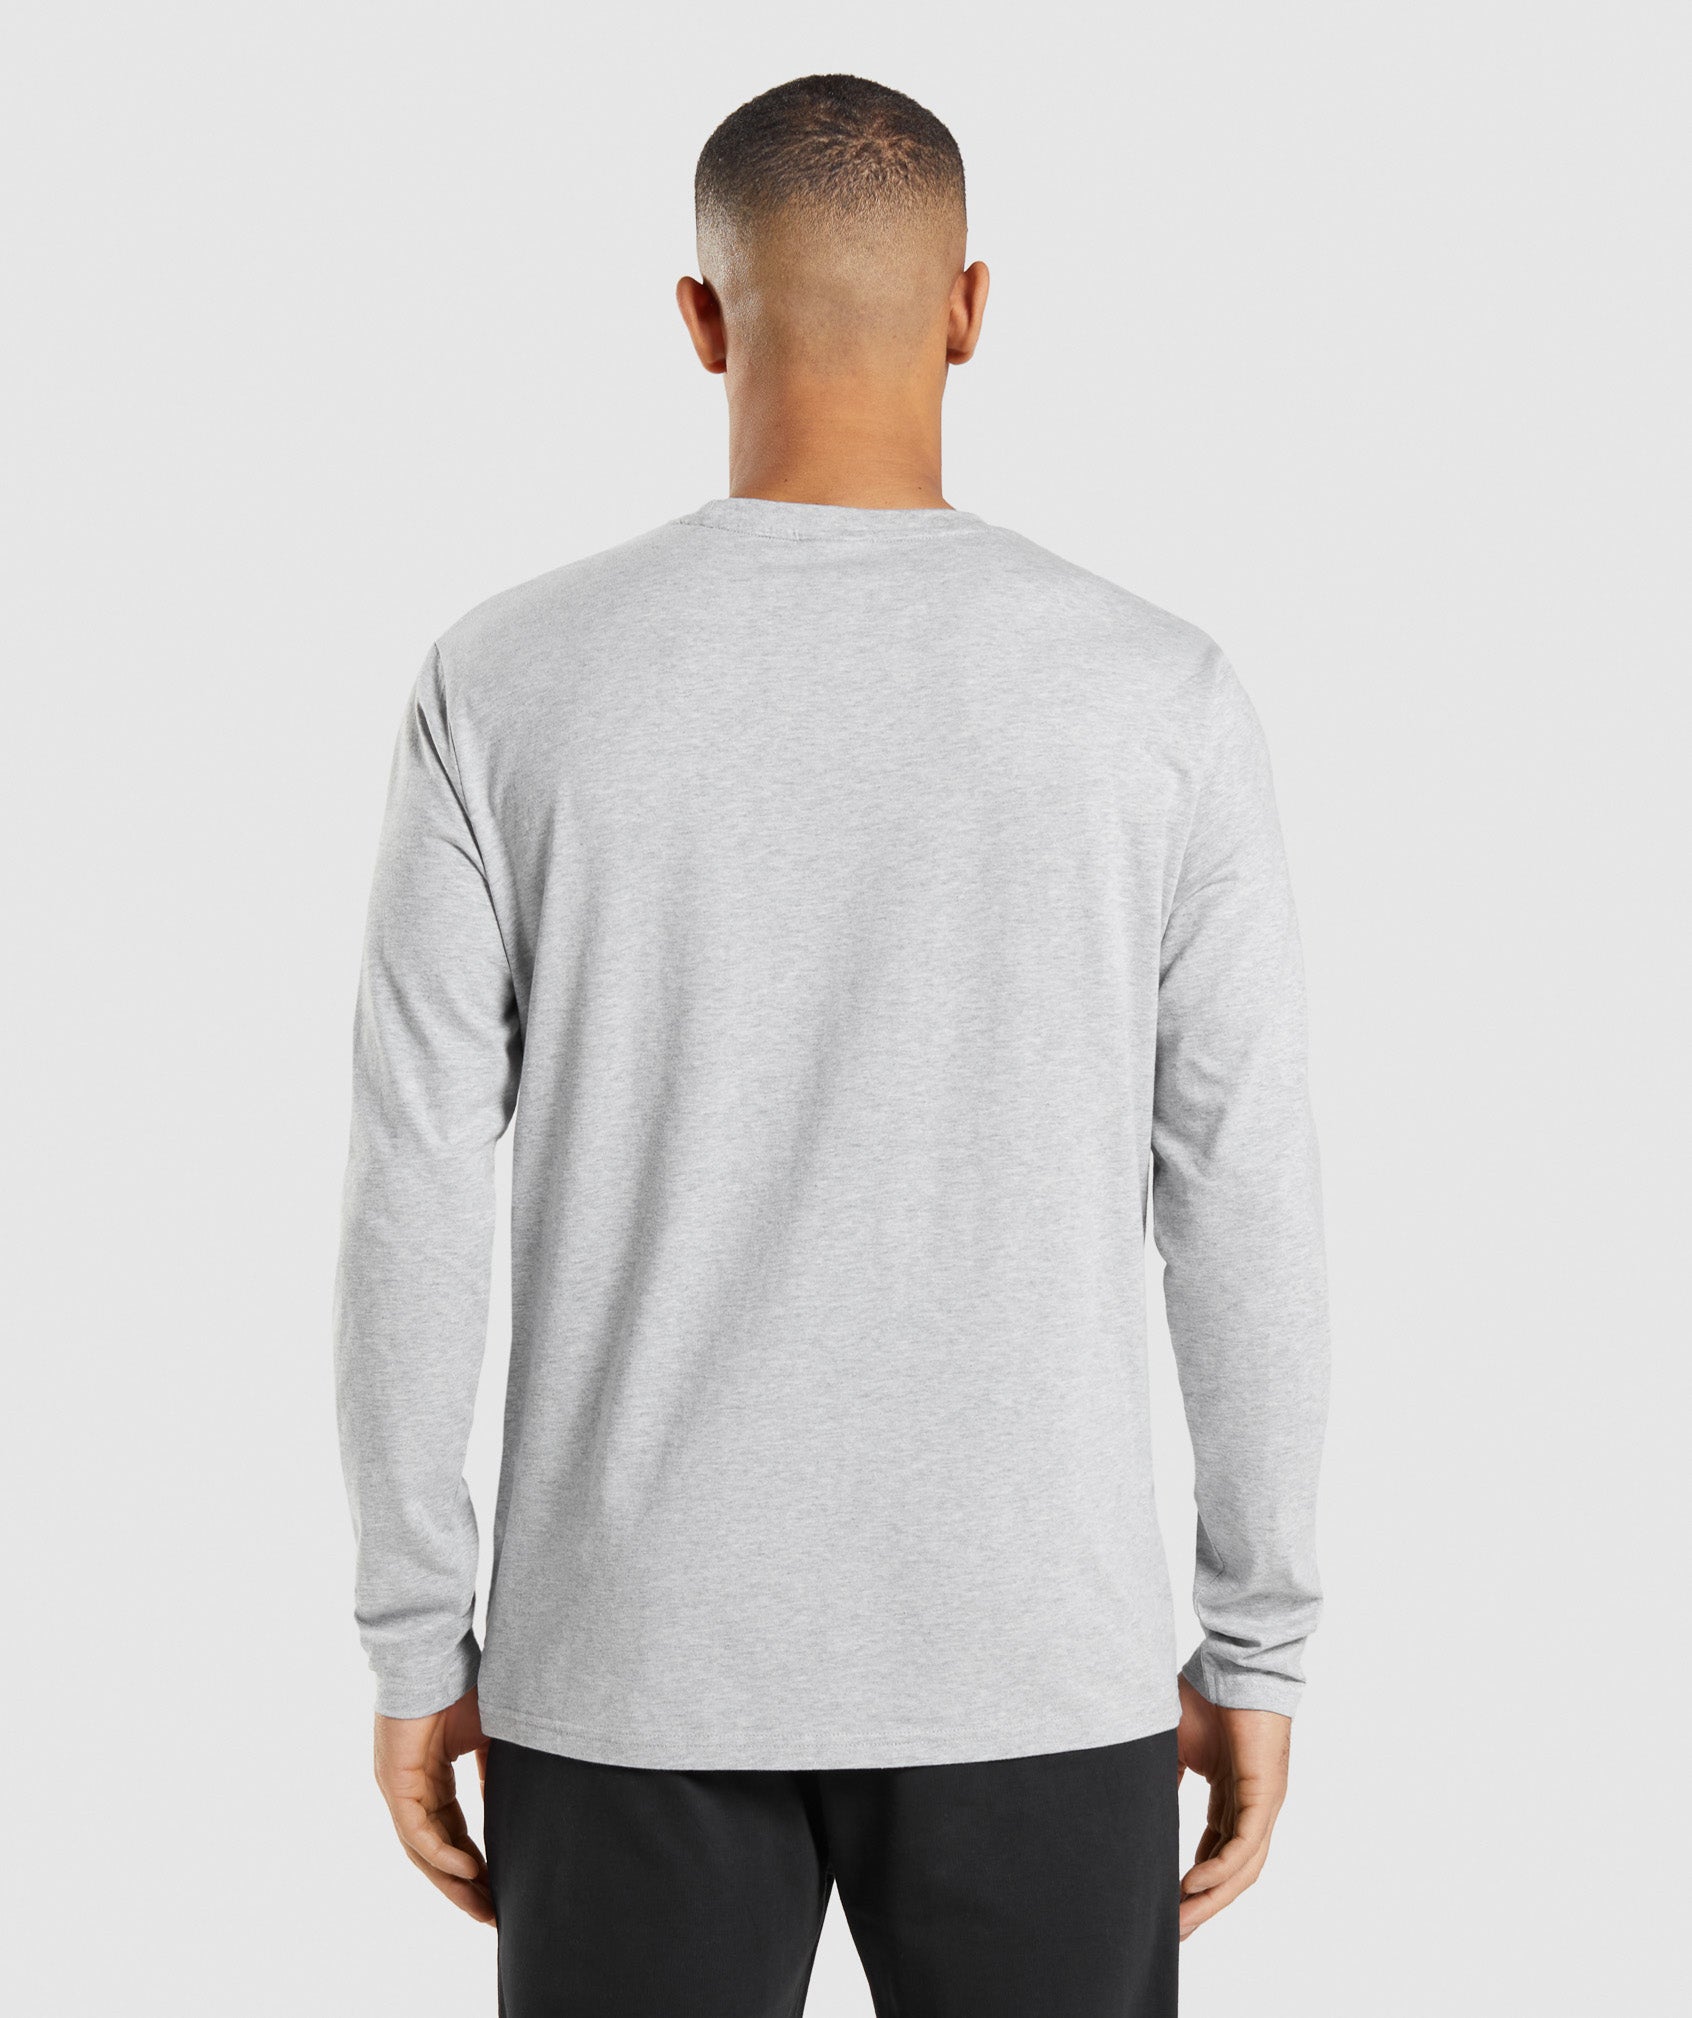 Crest Long Sleeve T-Shirt in Light Grey Core Marl